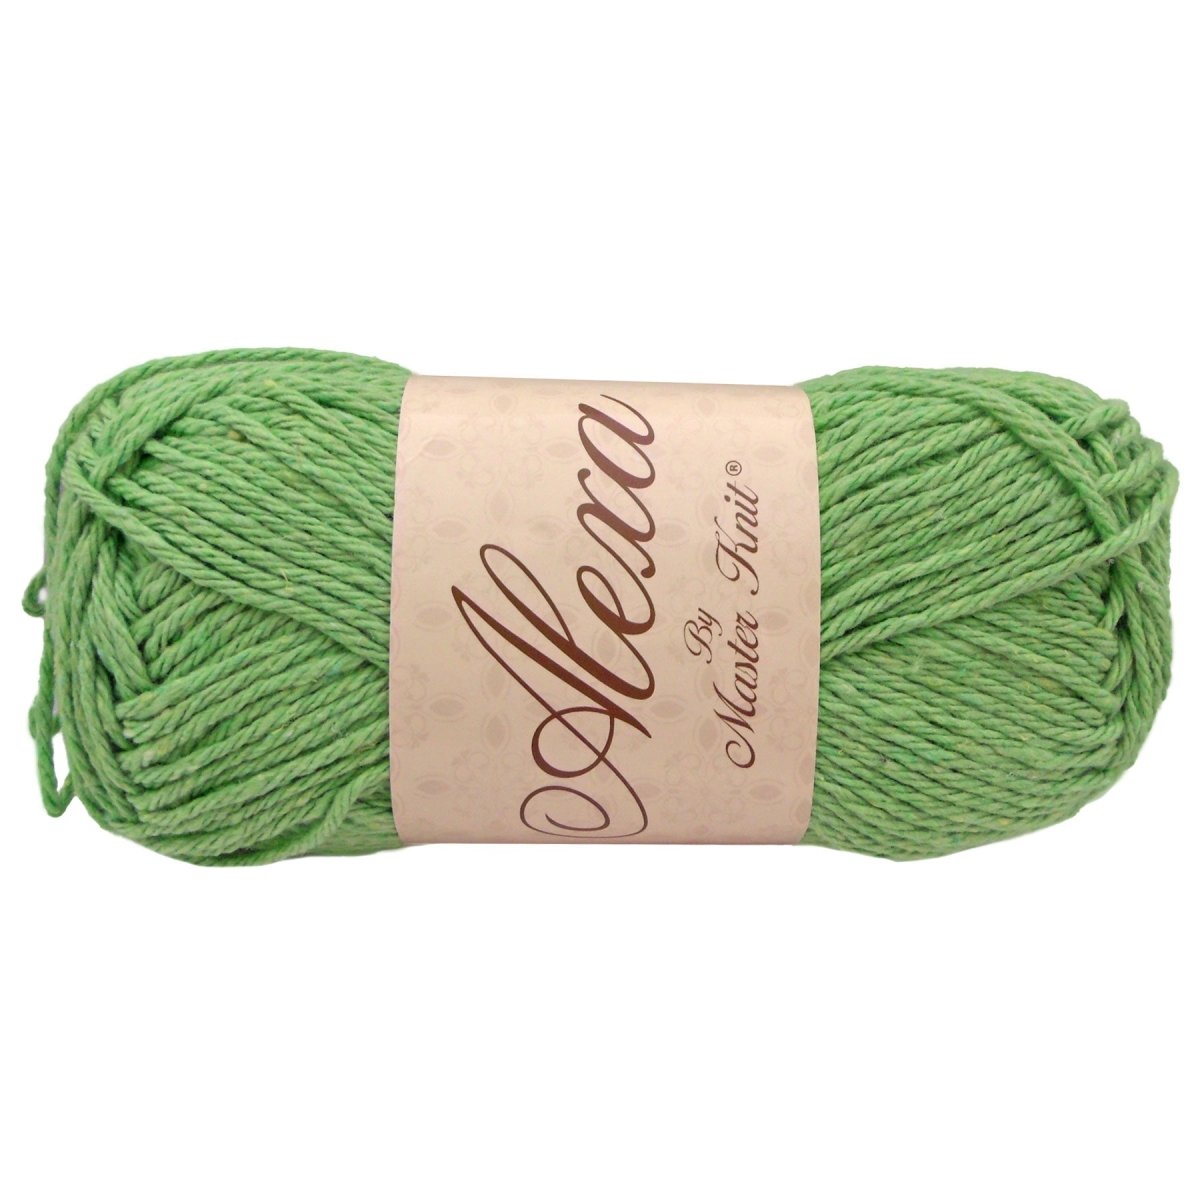 ALEXA - Crochetstores9340-369